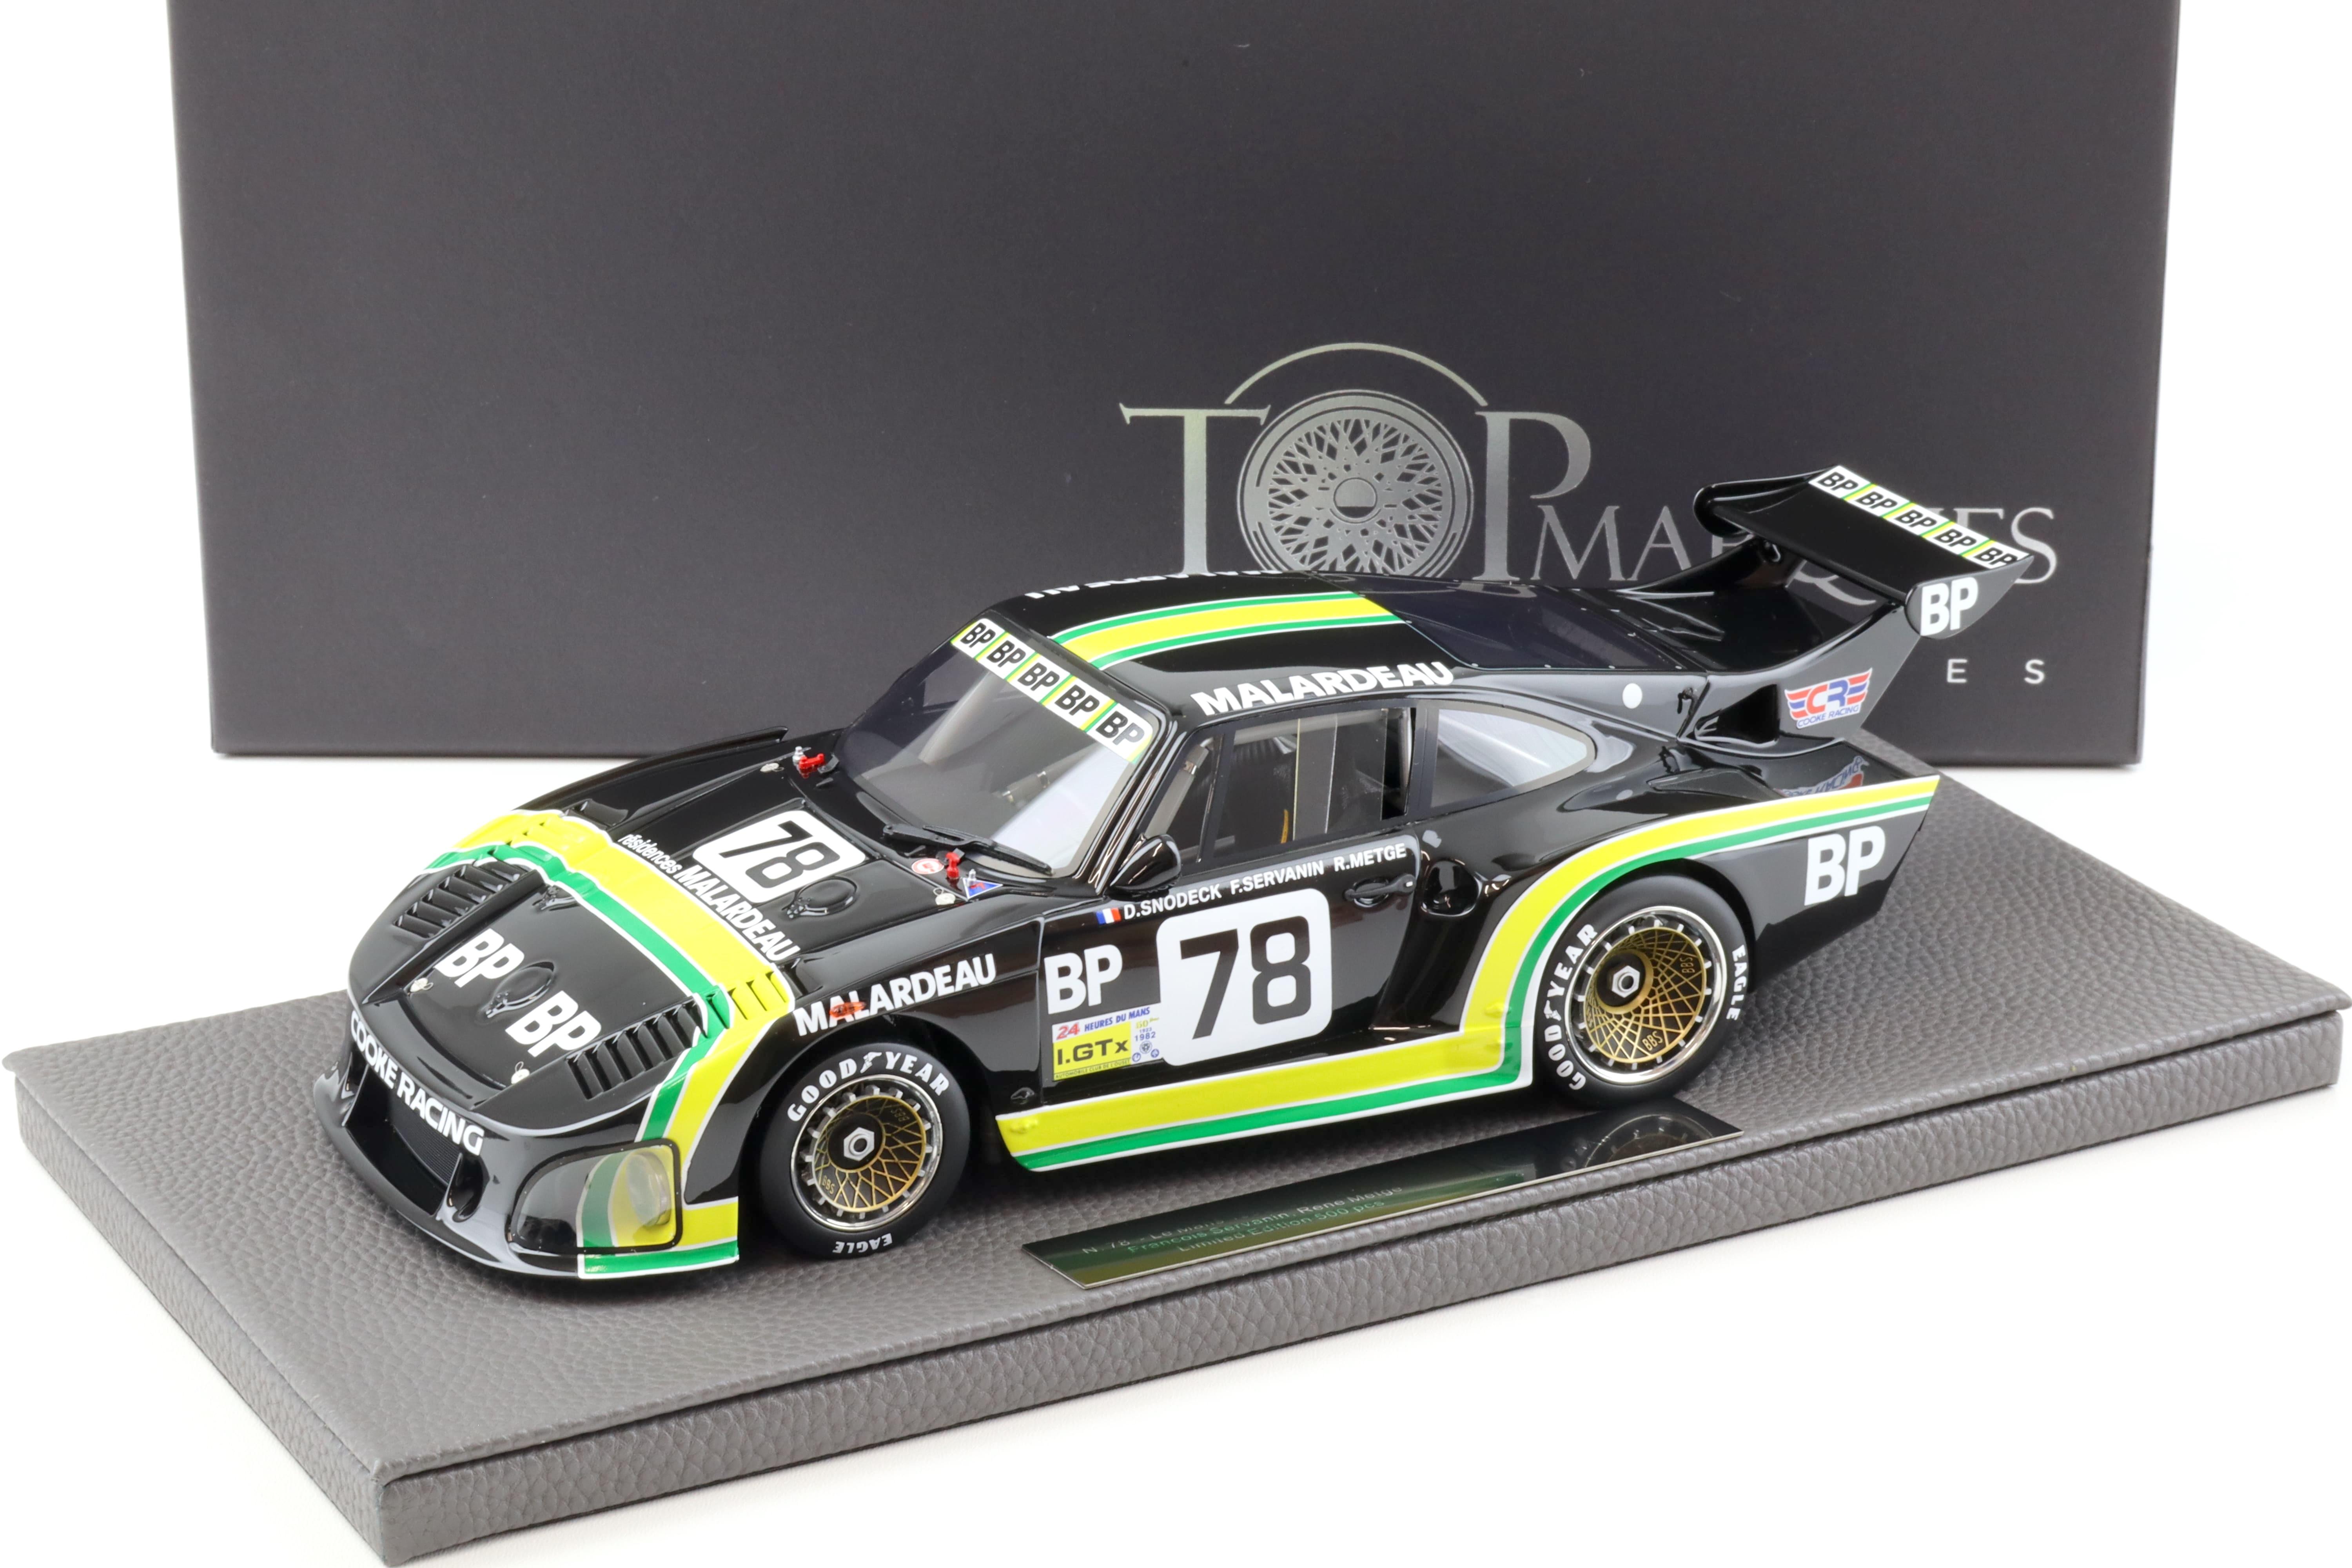 1:18 Top Marques Porsche 935 K3 Coke Racing BP Le Mans 1980 Snobeck #78